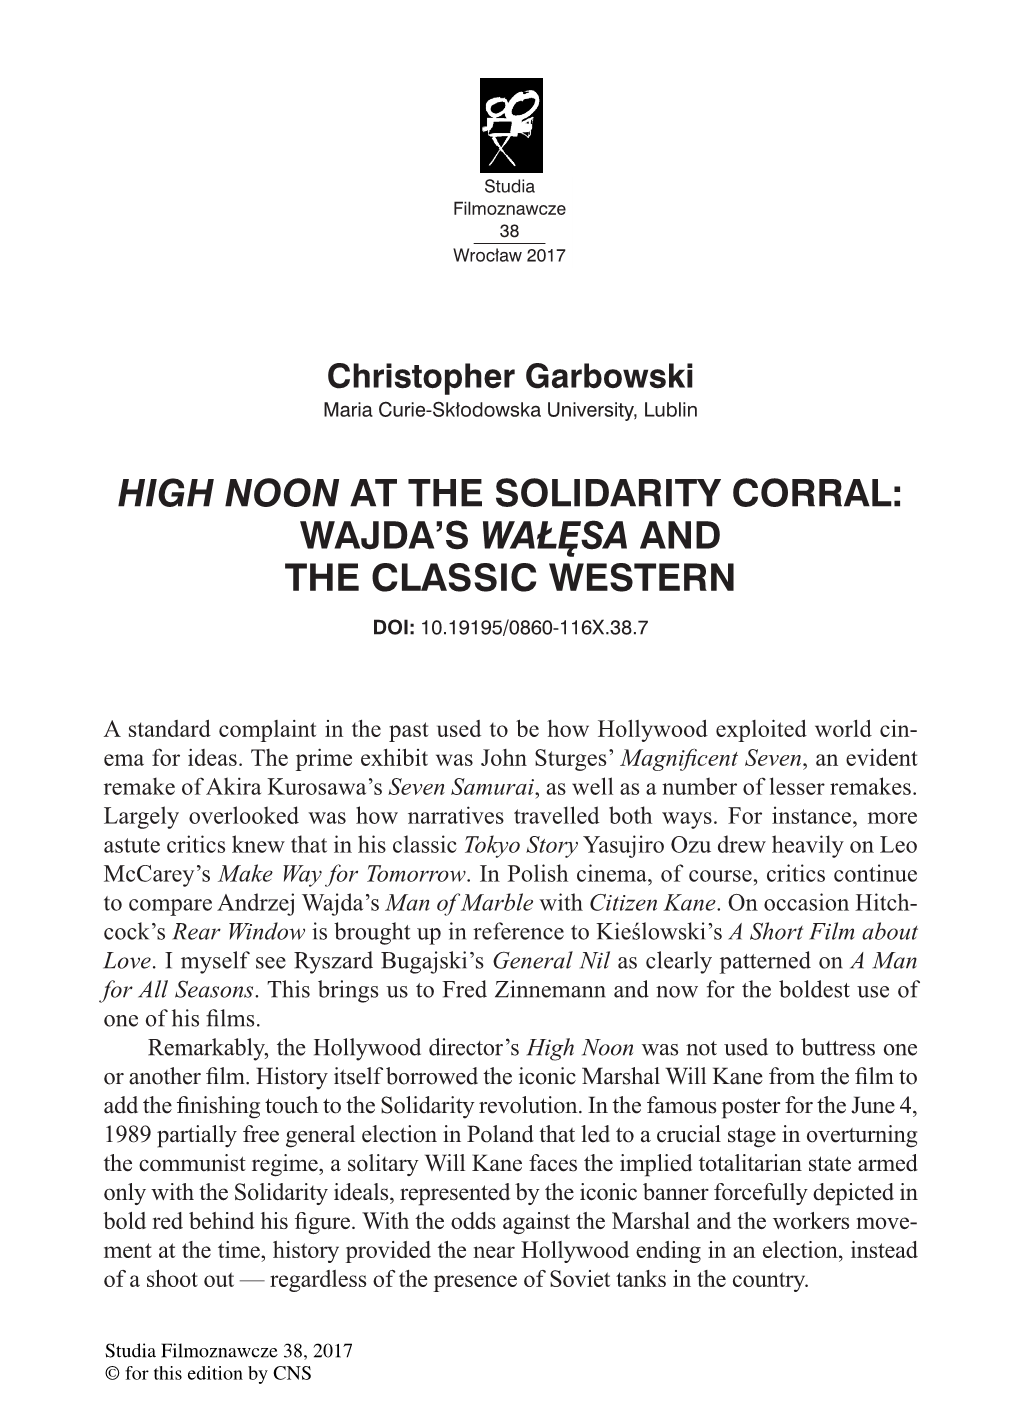 High Noon at the Solidarity Corral: Wajda's Wałęsa and the Classic Western